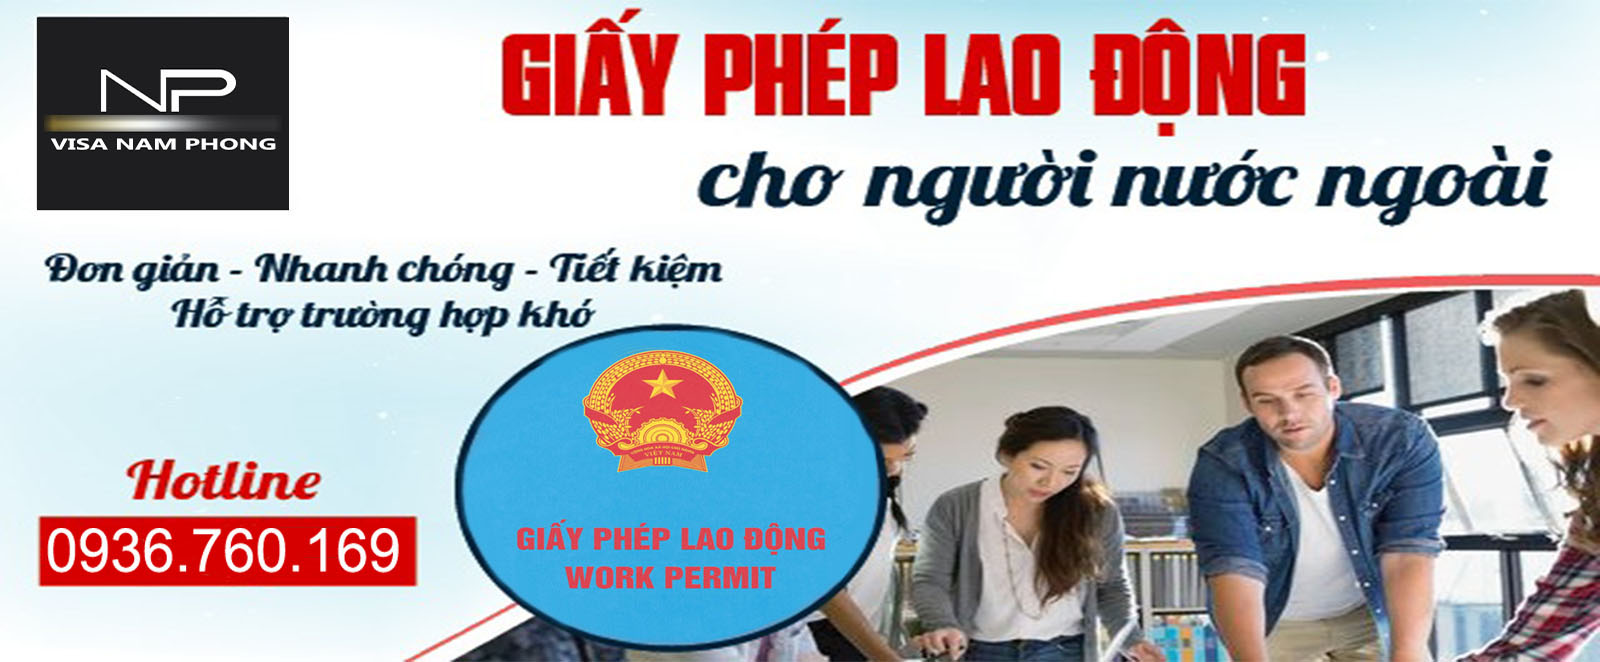 giay phep lao dong 